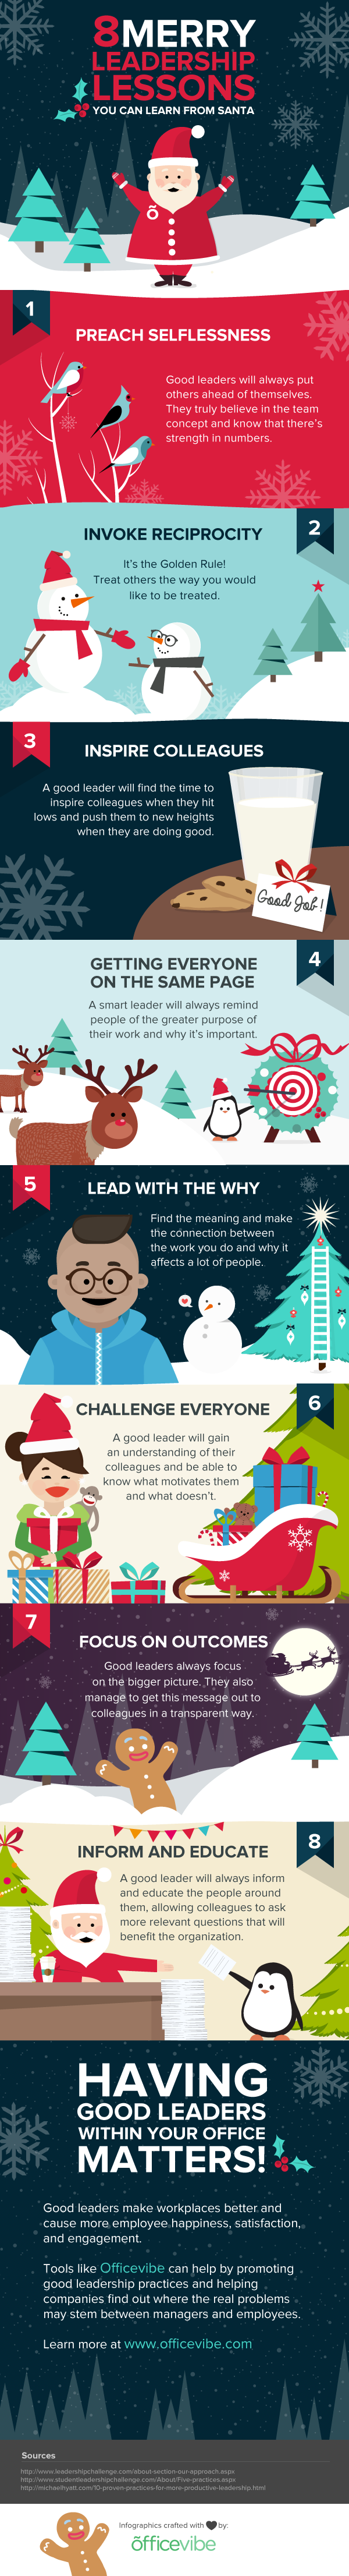 infographic-santa-leadership.png